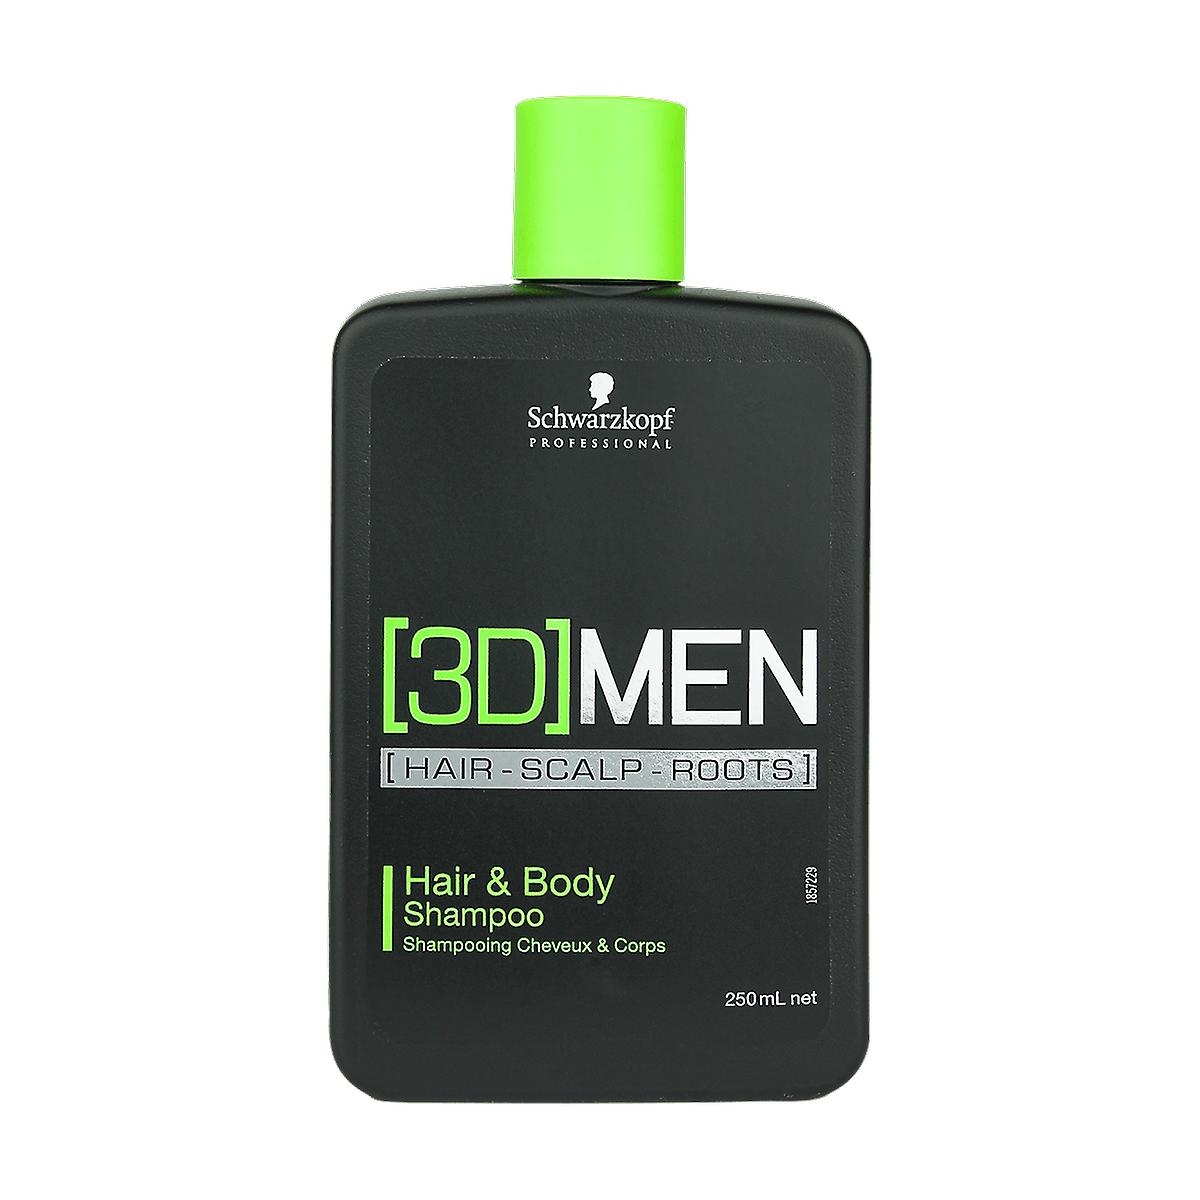 Schwarzkopf 3D MEN Hair & Body Shampoo 250ml - Hairsale.se